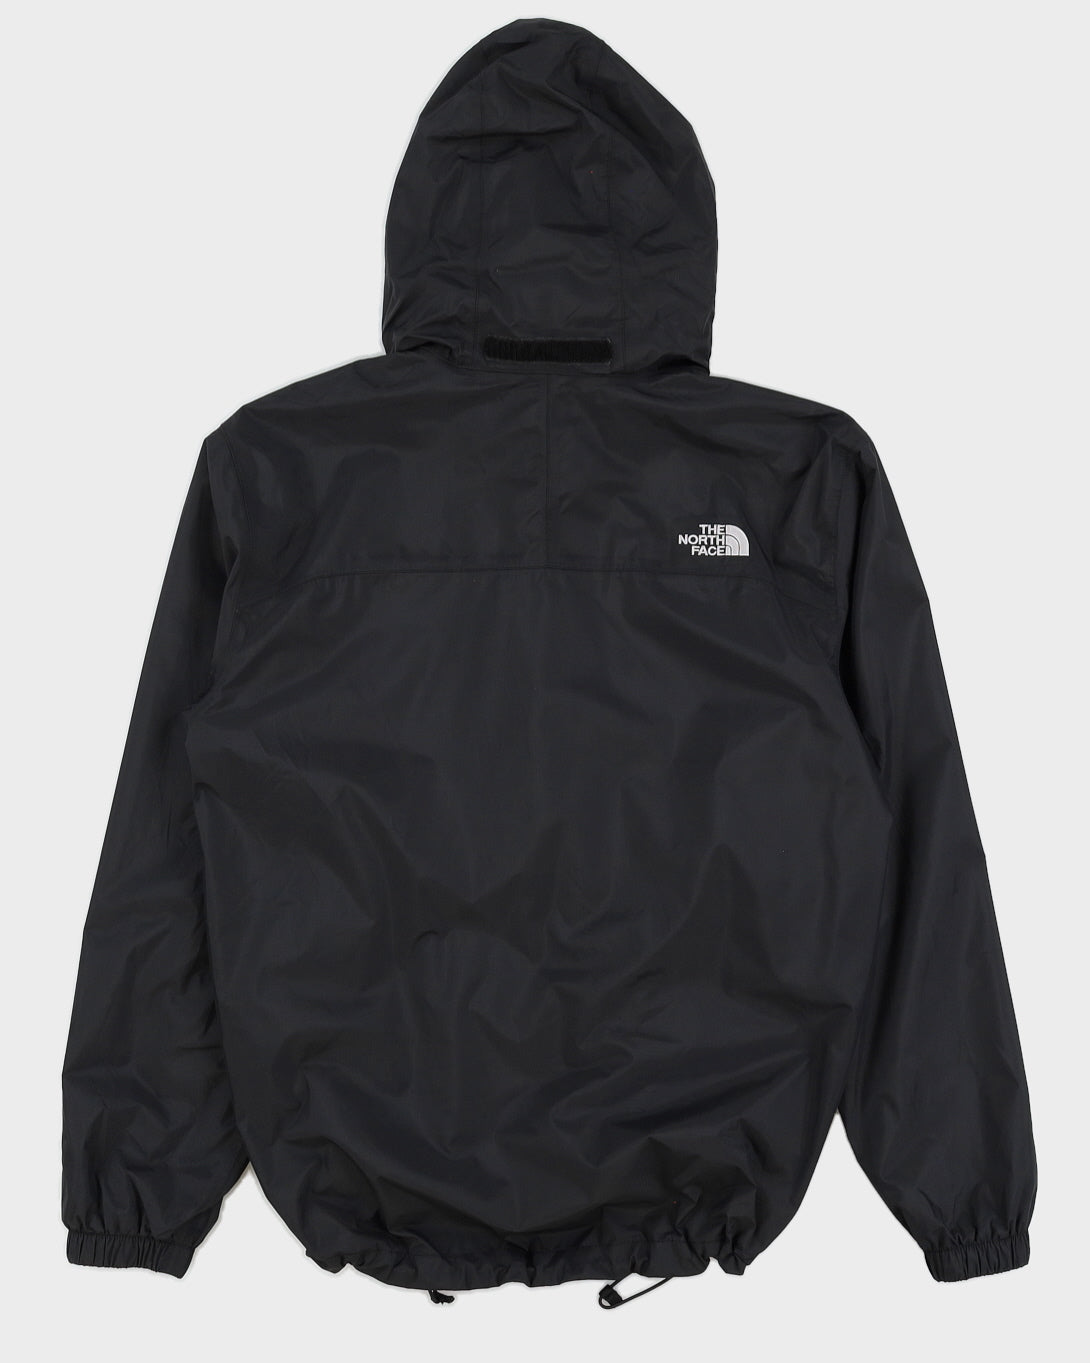 The North Face Black Nylon Hooded Jacket - S